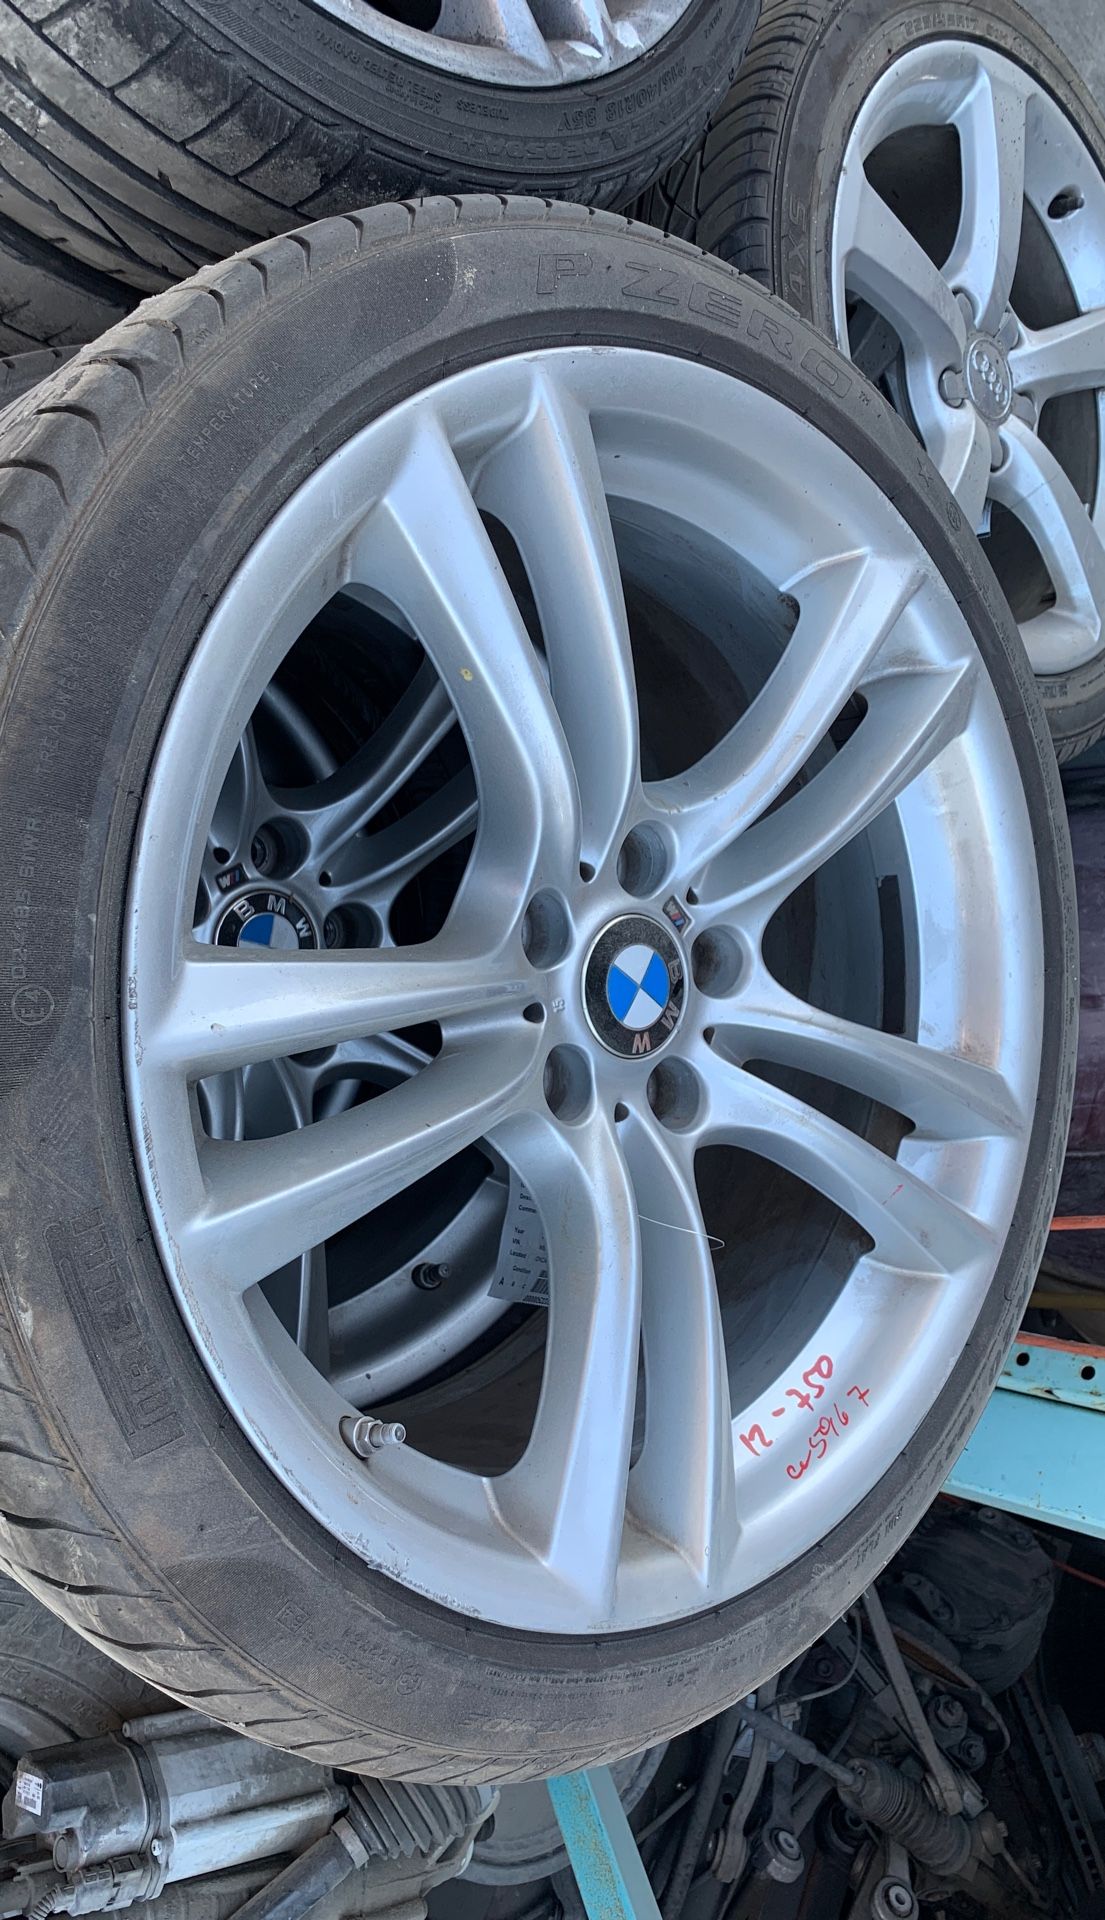 2012 BMW 750i 20x10 10 Double Spoke 275/35 Wheels Rims and Tires Set, CV5967